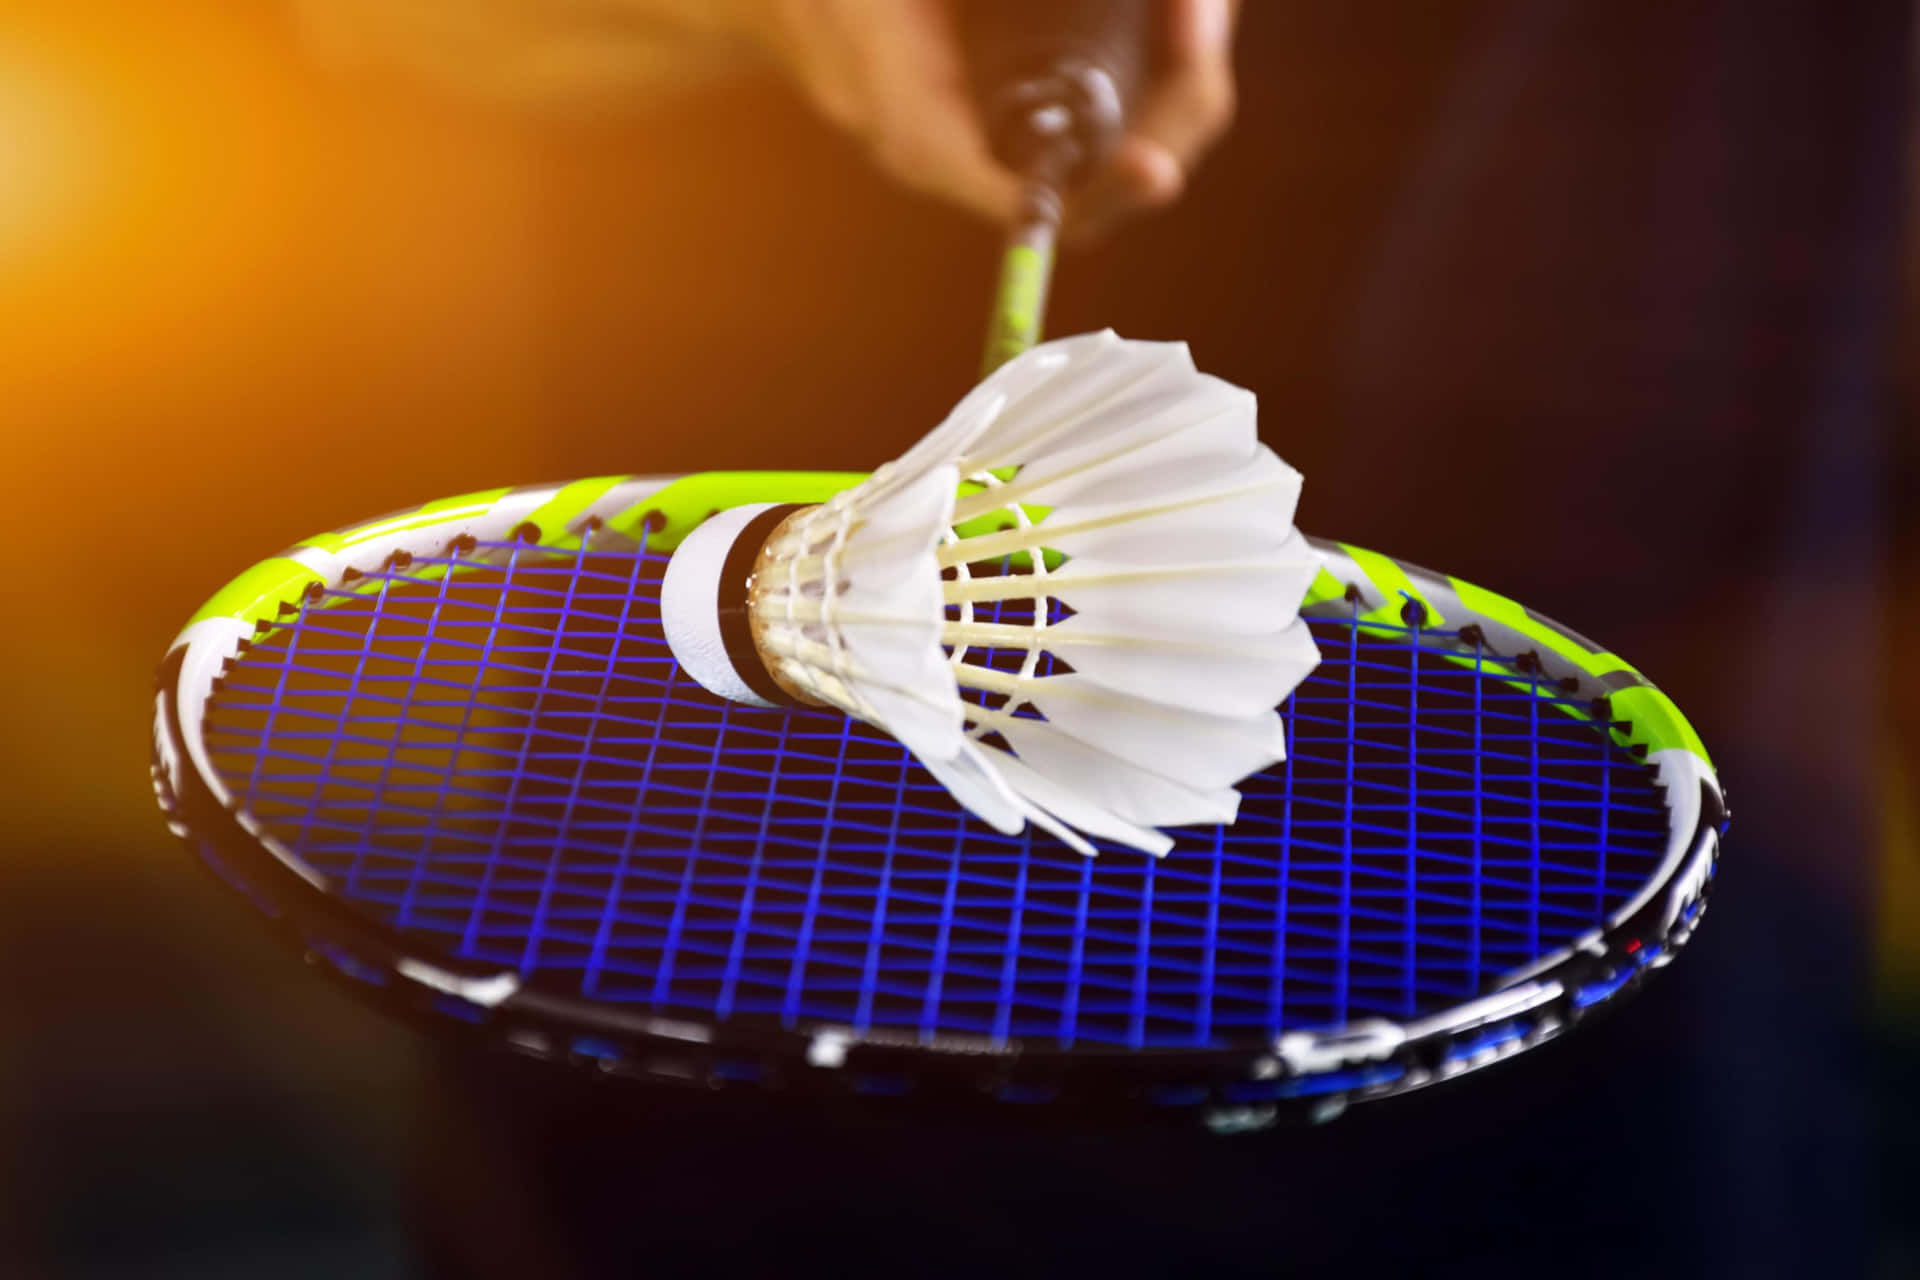 Badmintonbakgrund